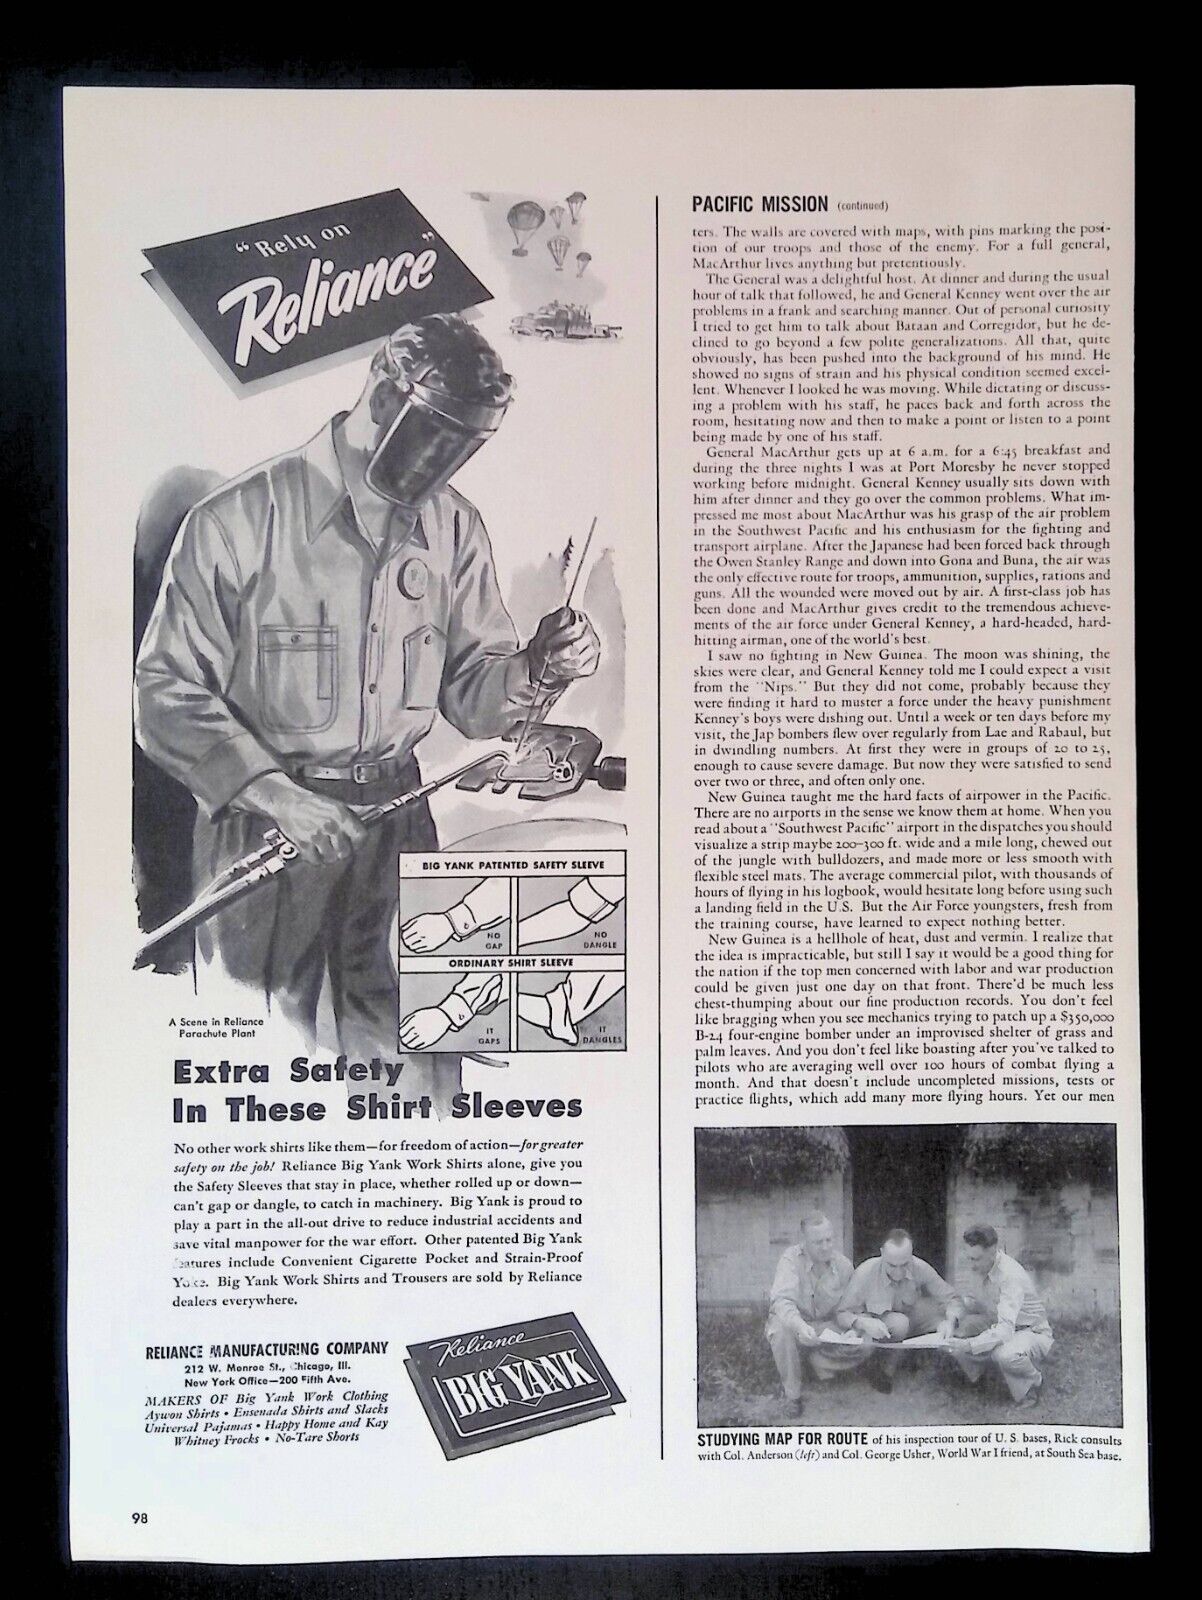 Print Ad 1943 Big Yank Reliance Welder Torch Work Shirts Cigarette Pocket